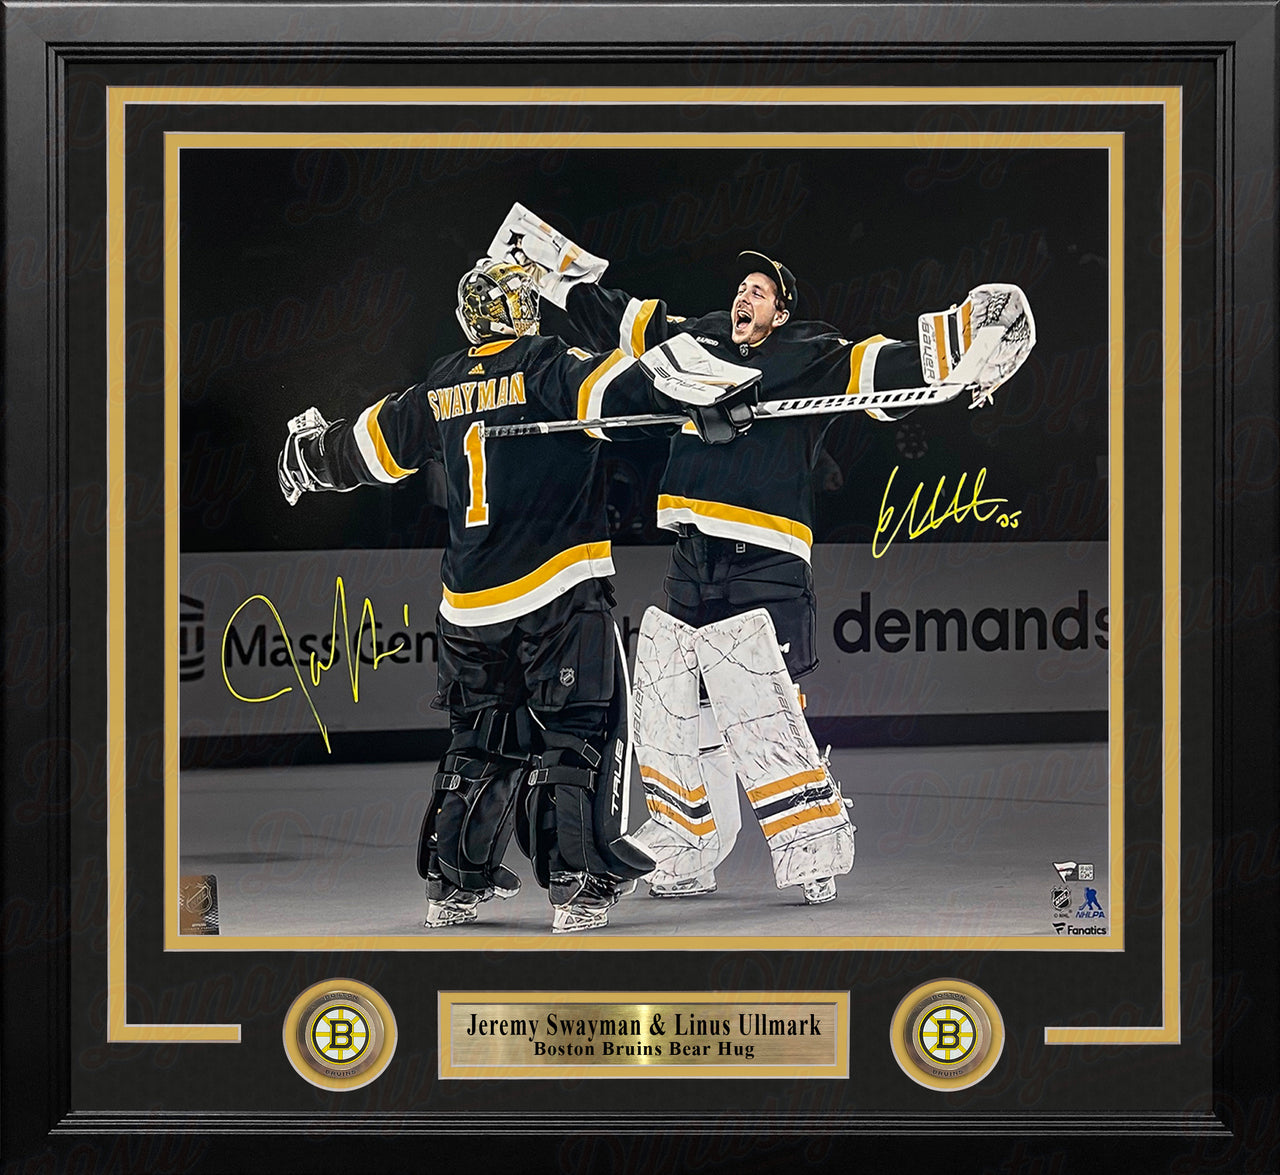 Jeremy Swayman & Linus Ullmark Bear Hug Boston Bruins Autographed 16x20 Framed Blackout Photo - Dynasty Sports & Framing 